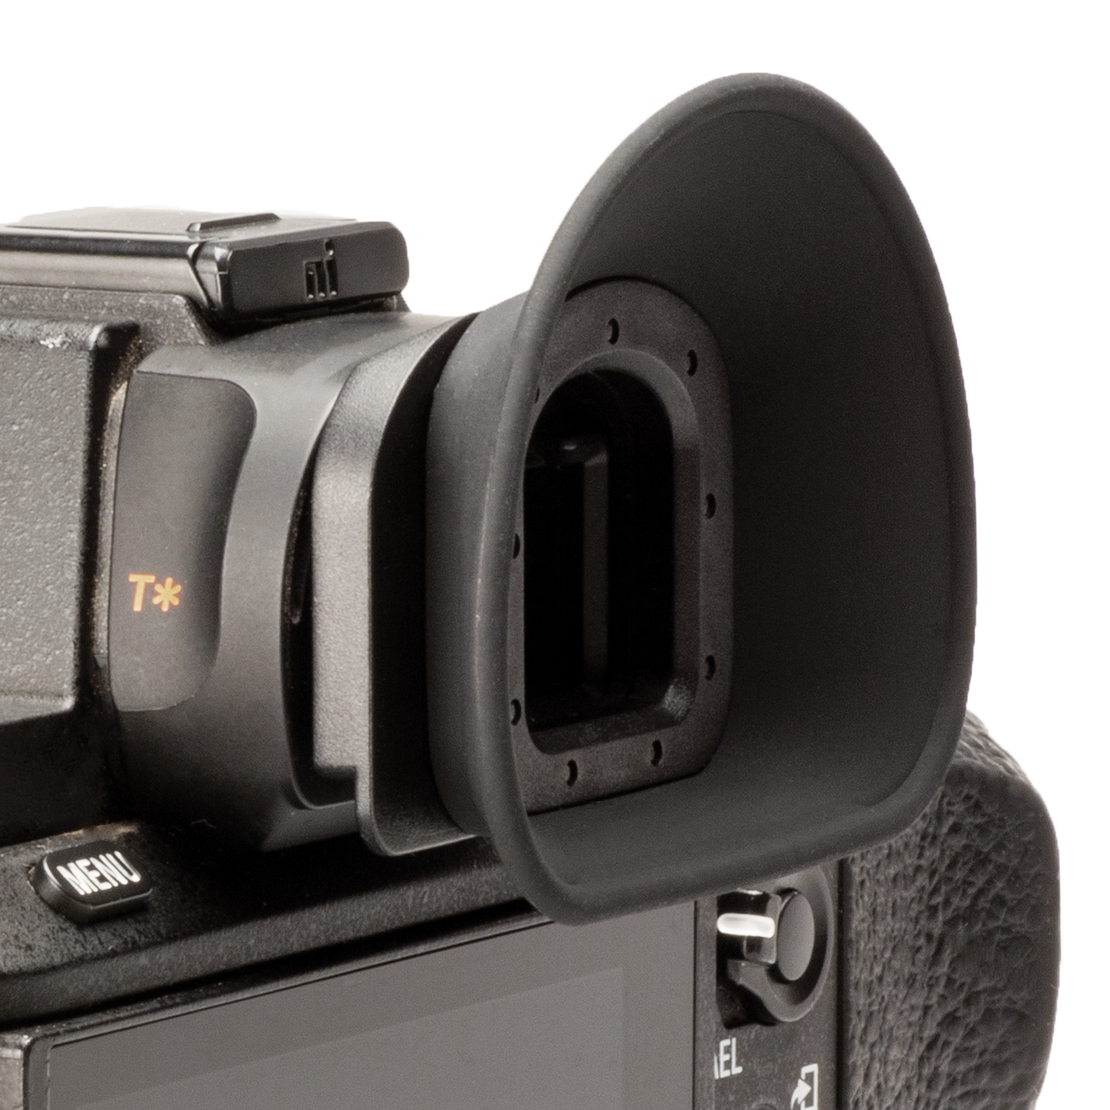 Hoodman eyecup fits select Sony A-series cameras